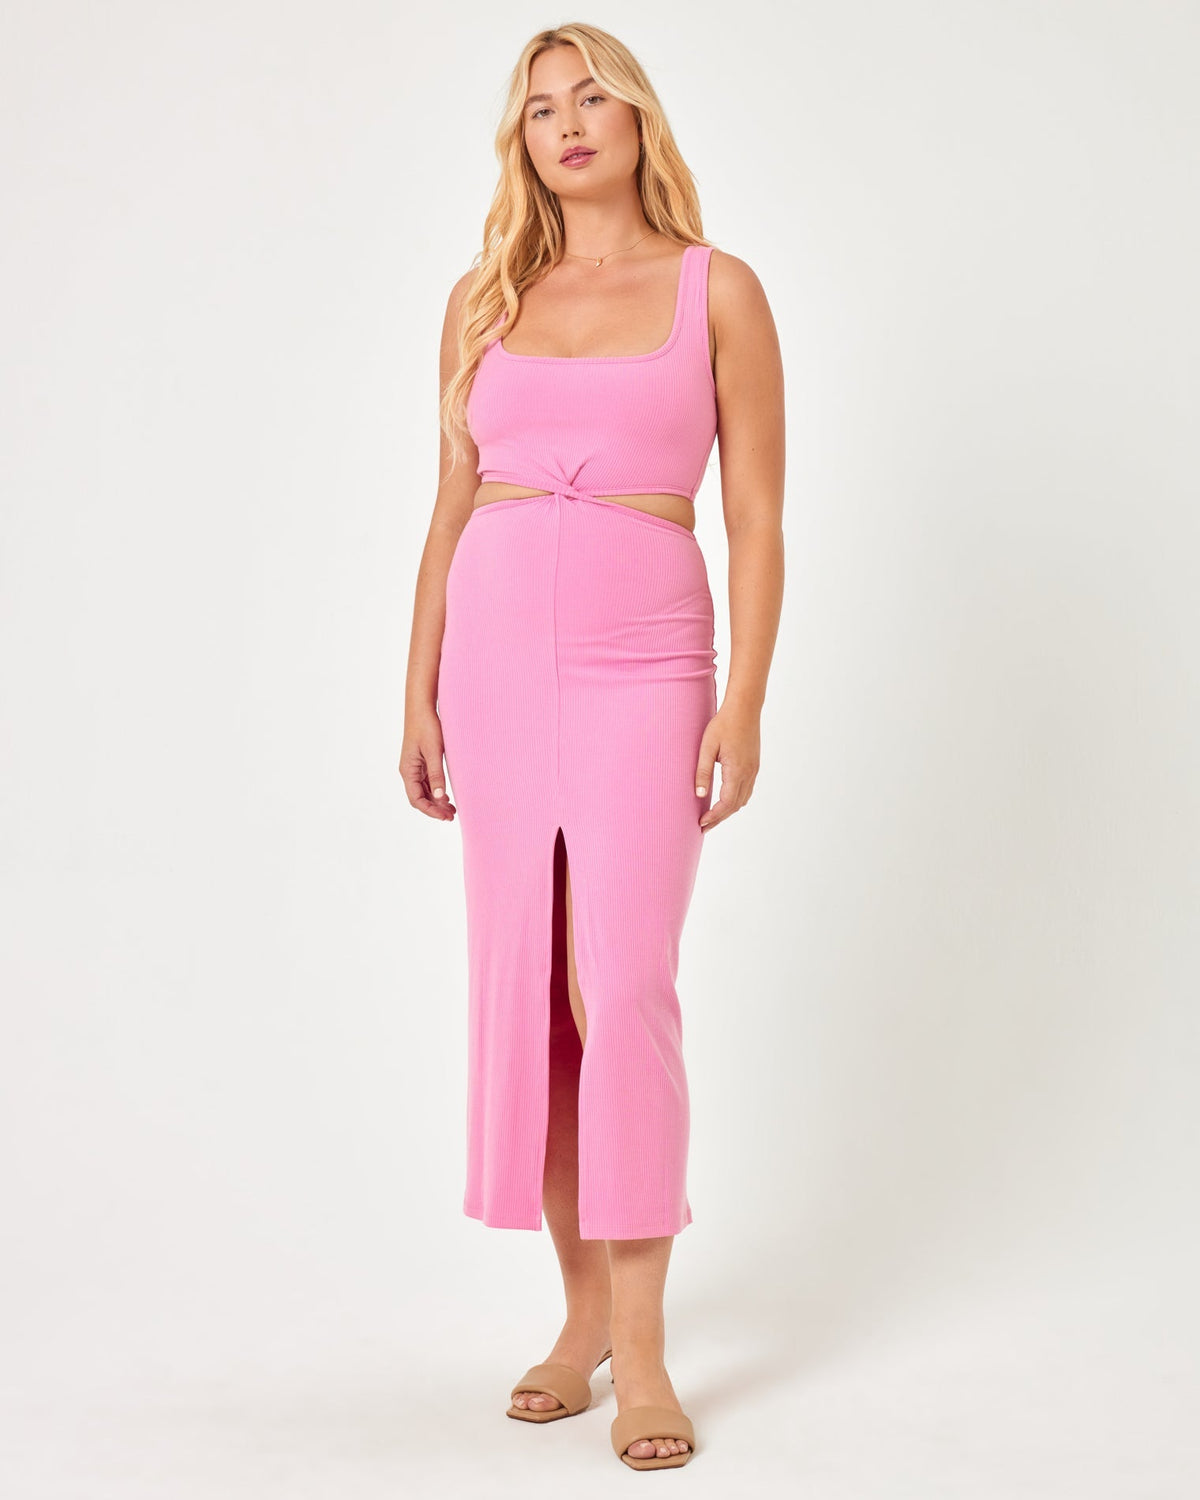 Skyler Dress - Guava Guava | Model: Sydney (size: XL)